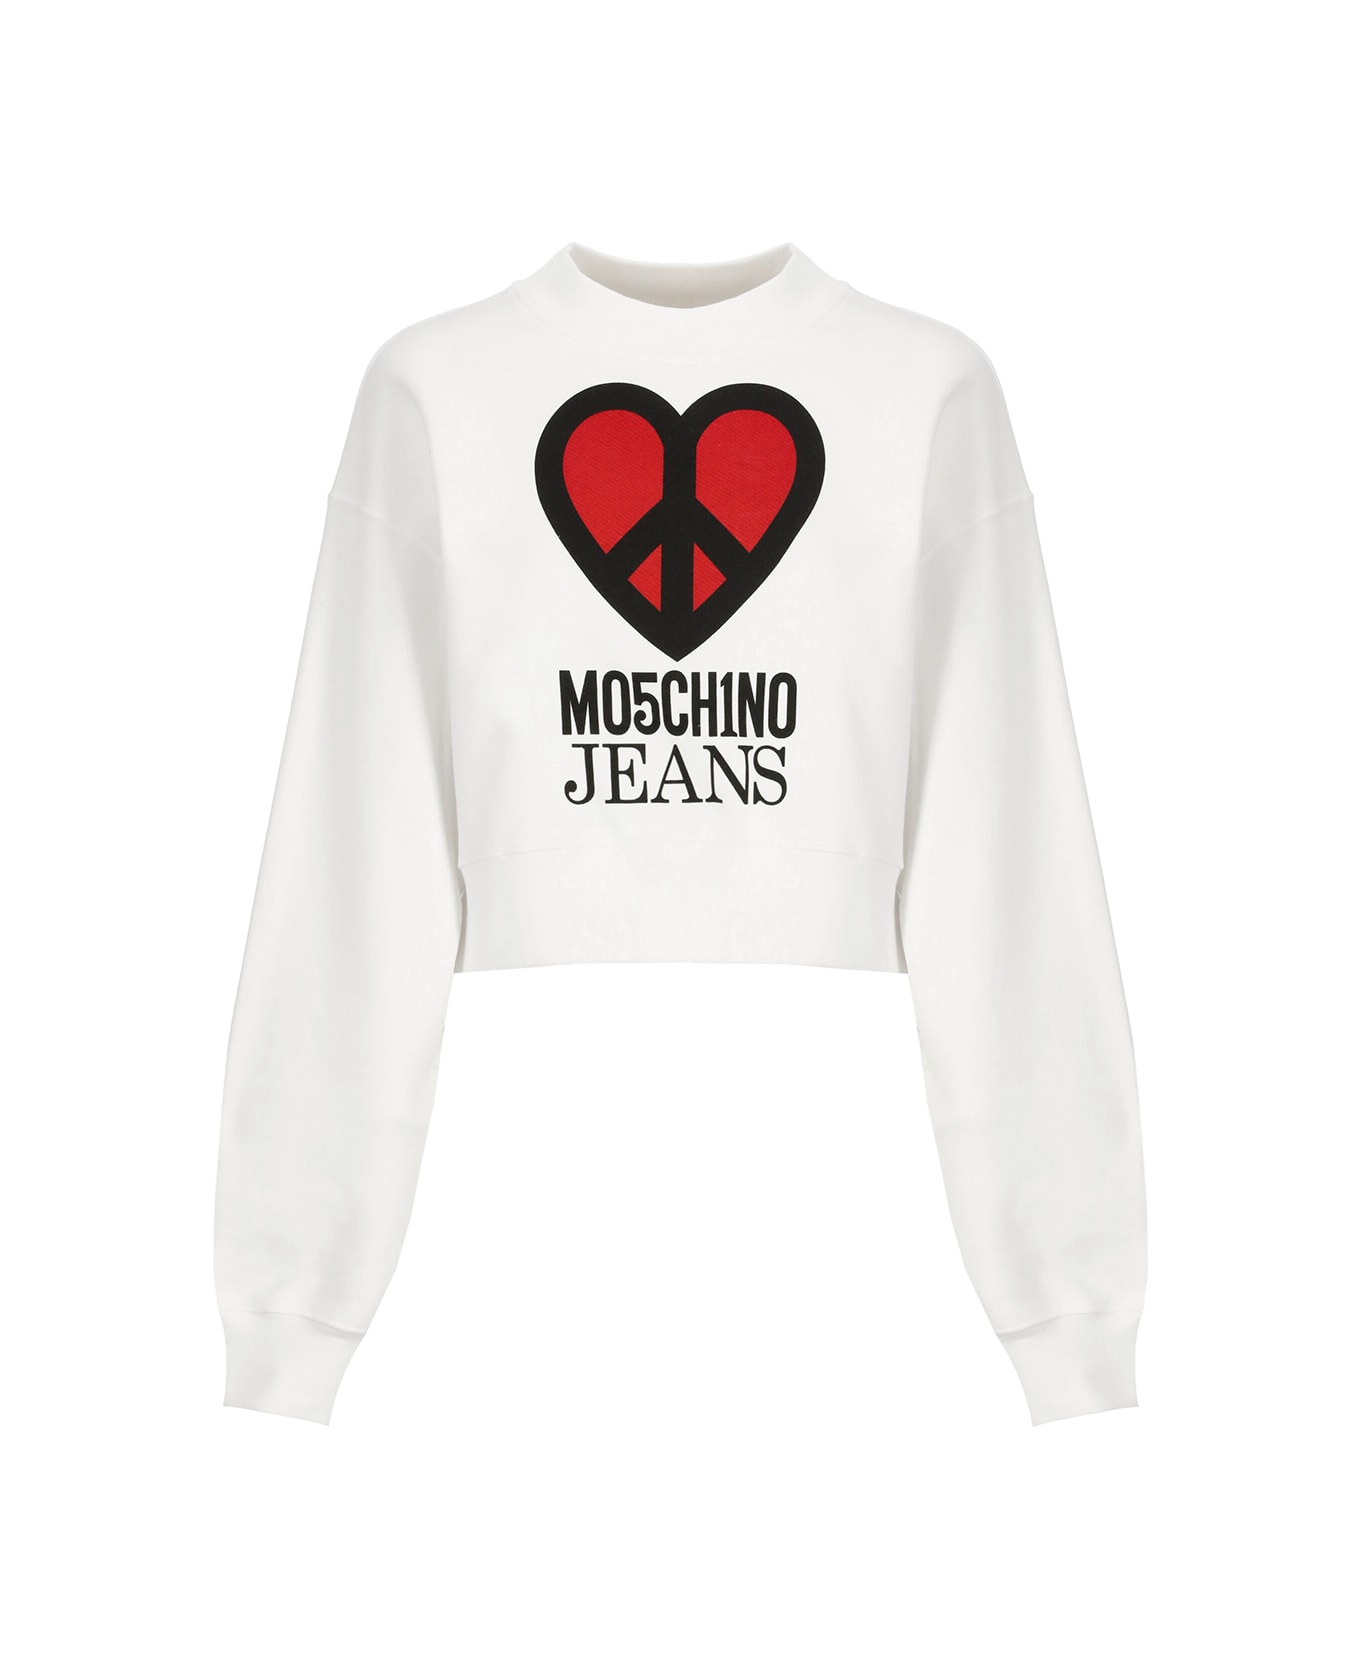 M05CH1N0 Jeans Cotton Sweatshirt - White